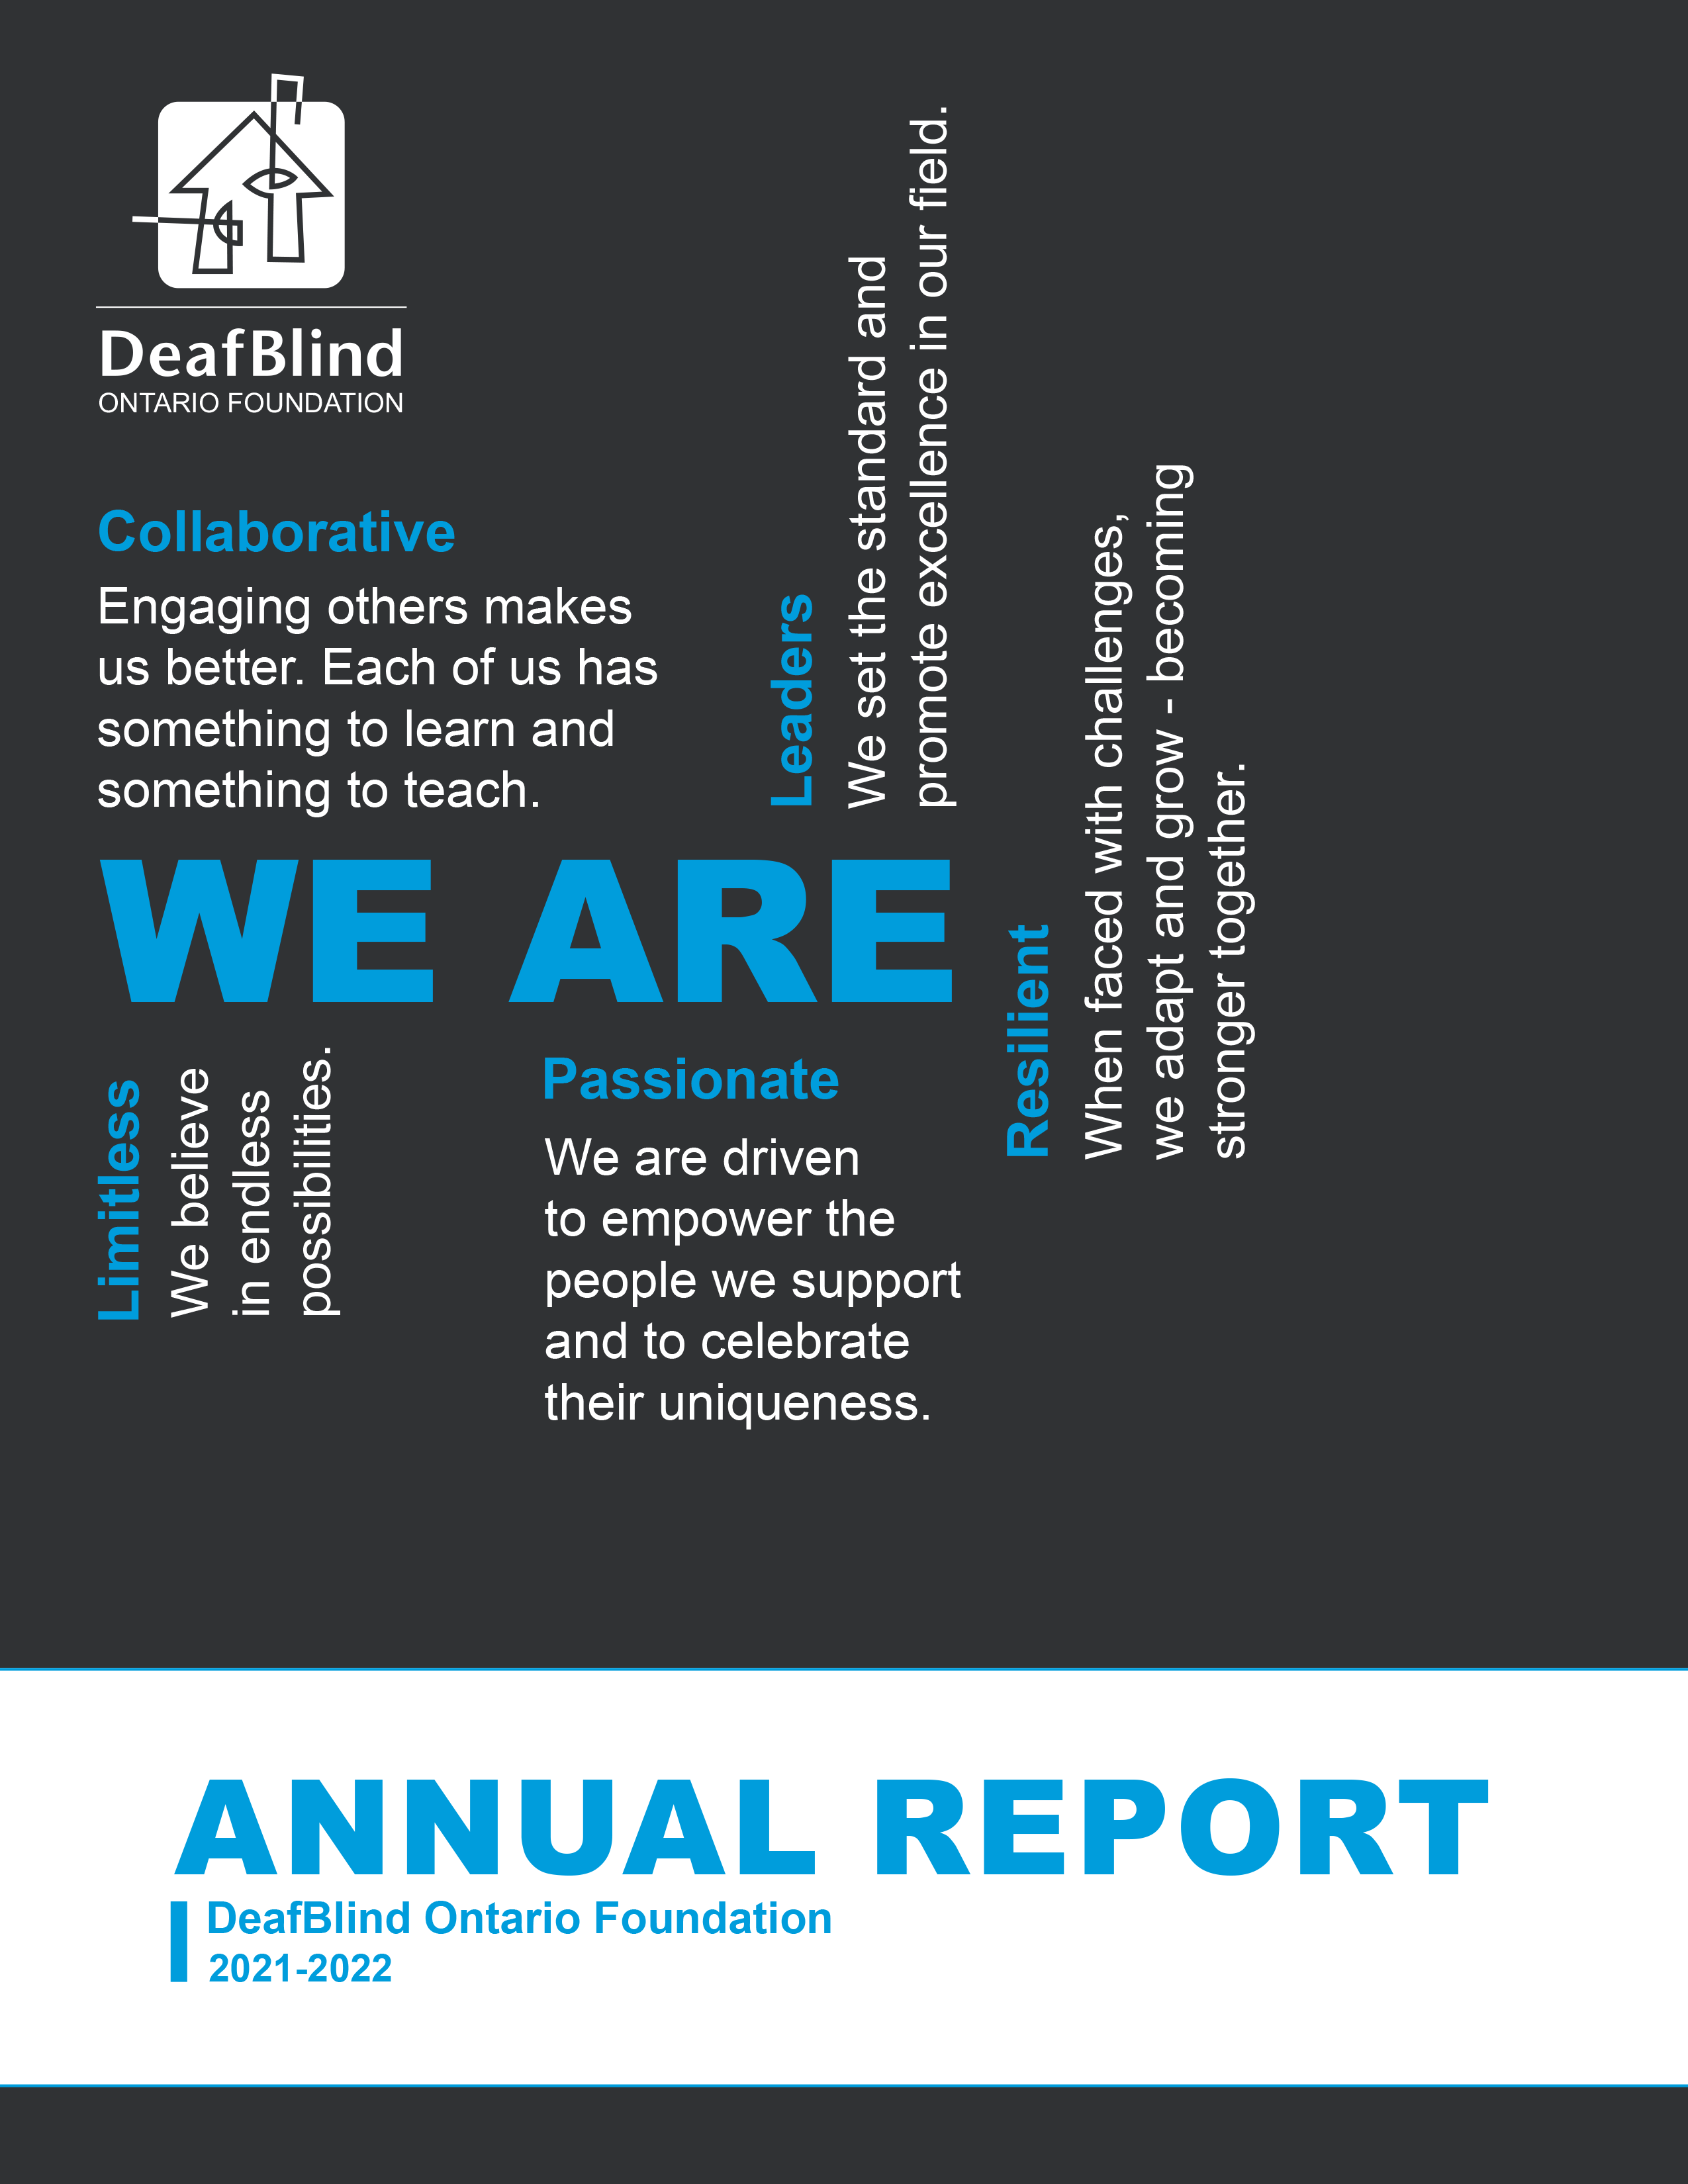 DeafBlind Ontario Foundation Annual Report Cover